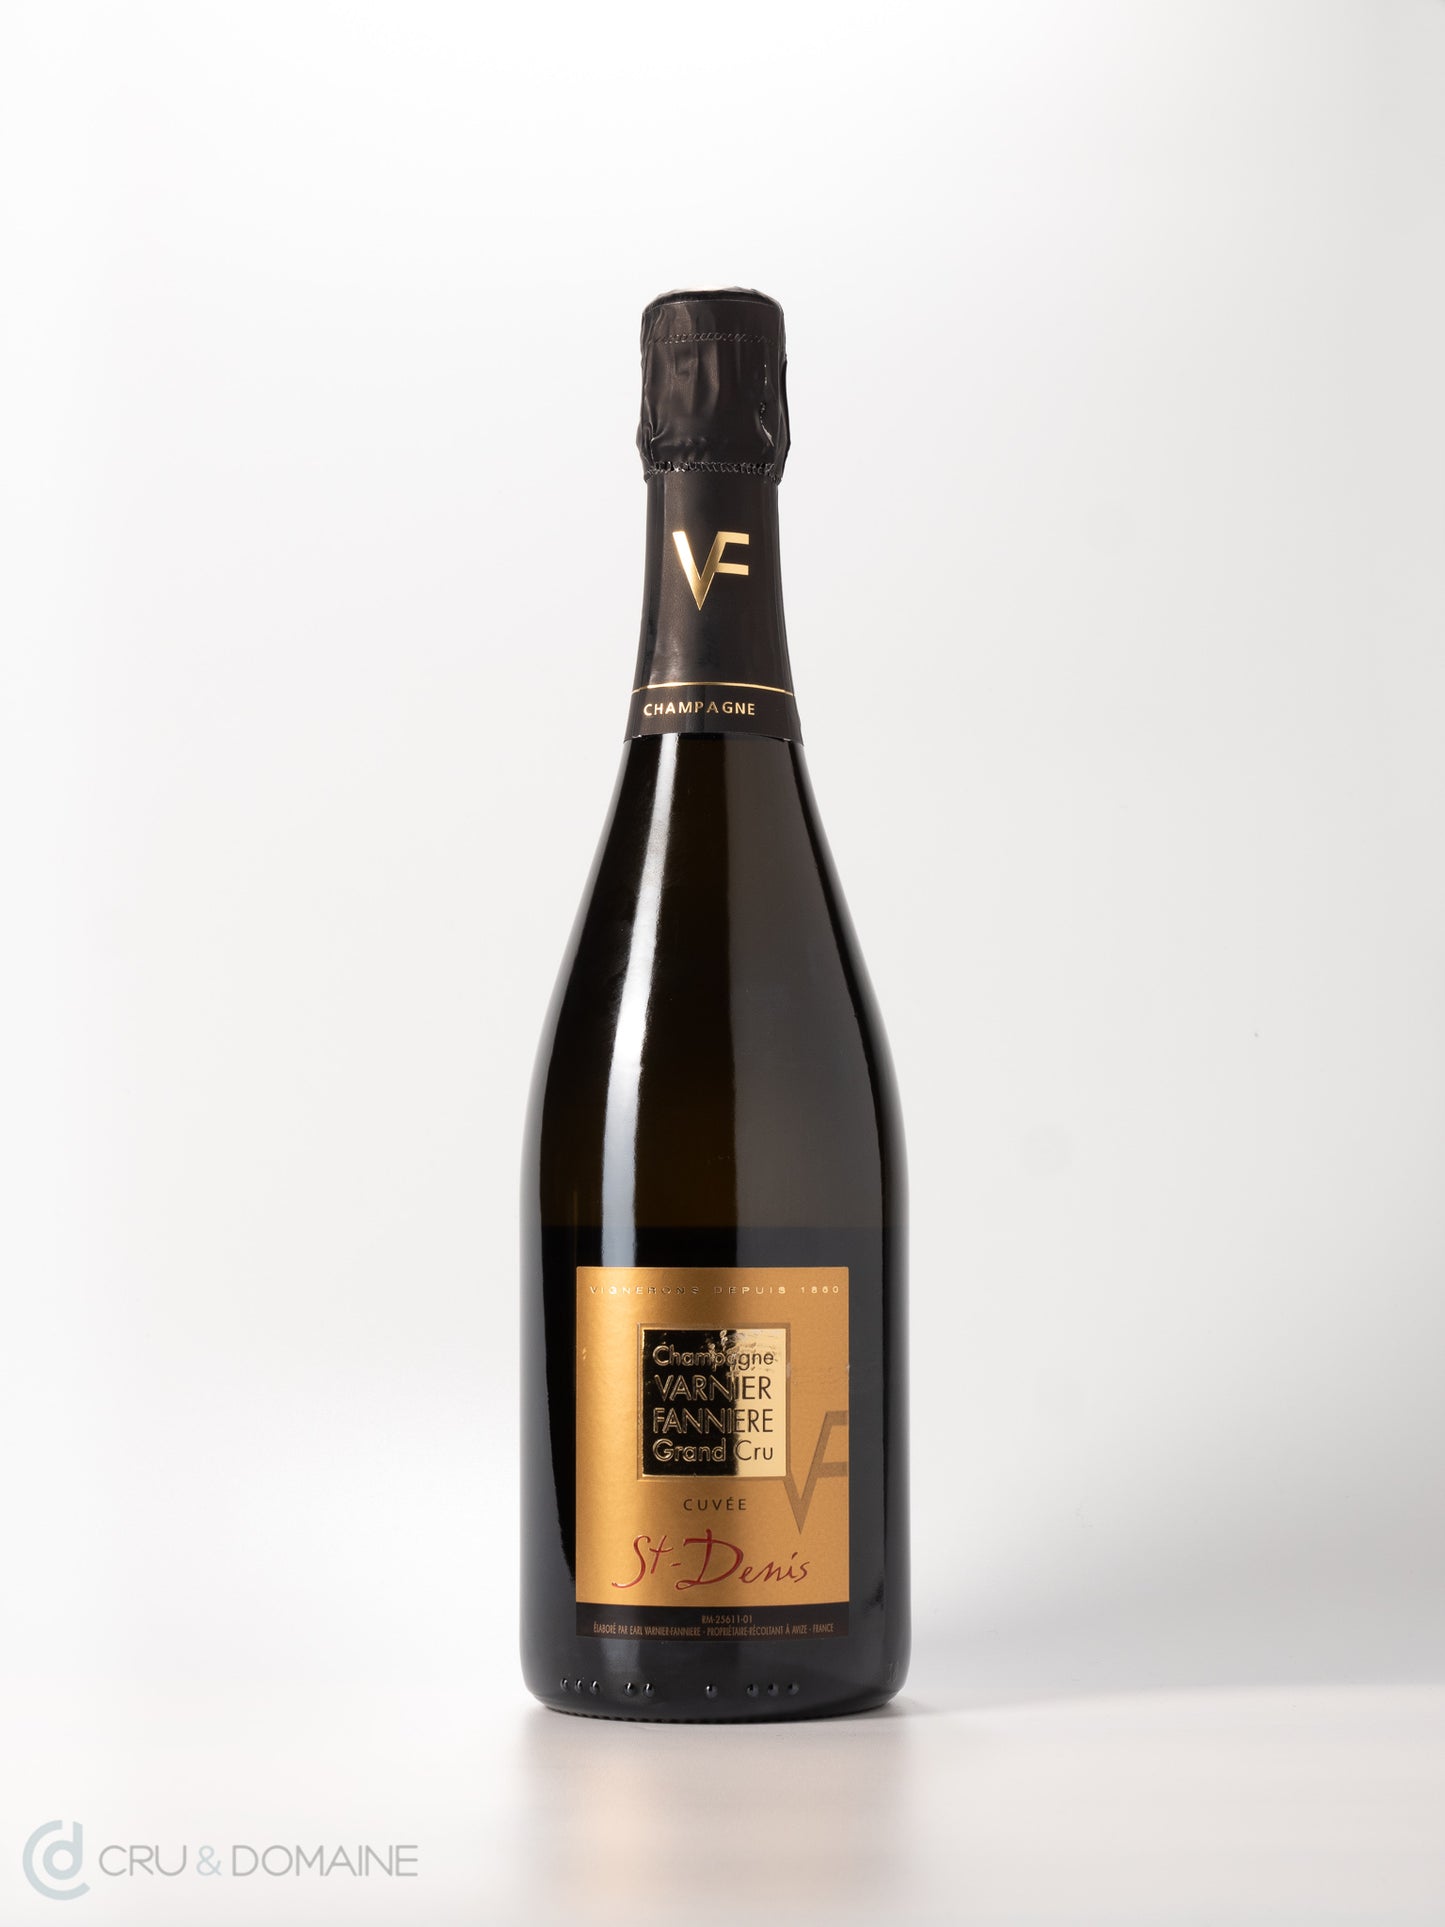 NV Varnier Fanniere, ‘Cuvee Saint Denis’, Avize Grand Cru, Brut, Champagne